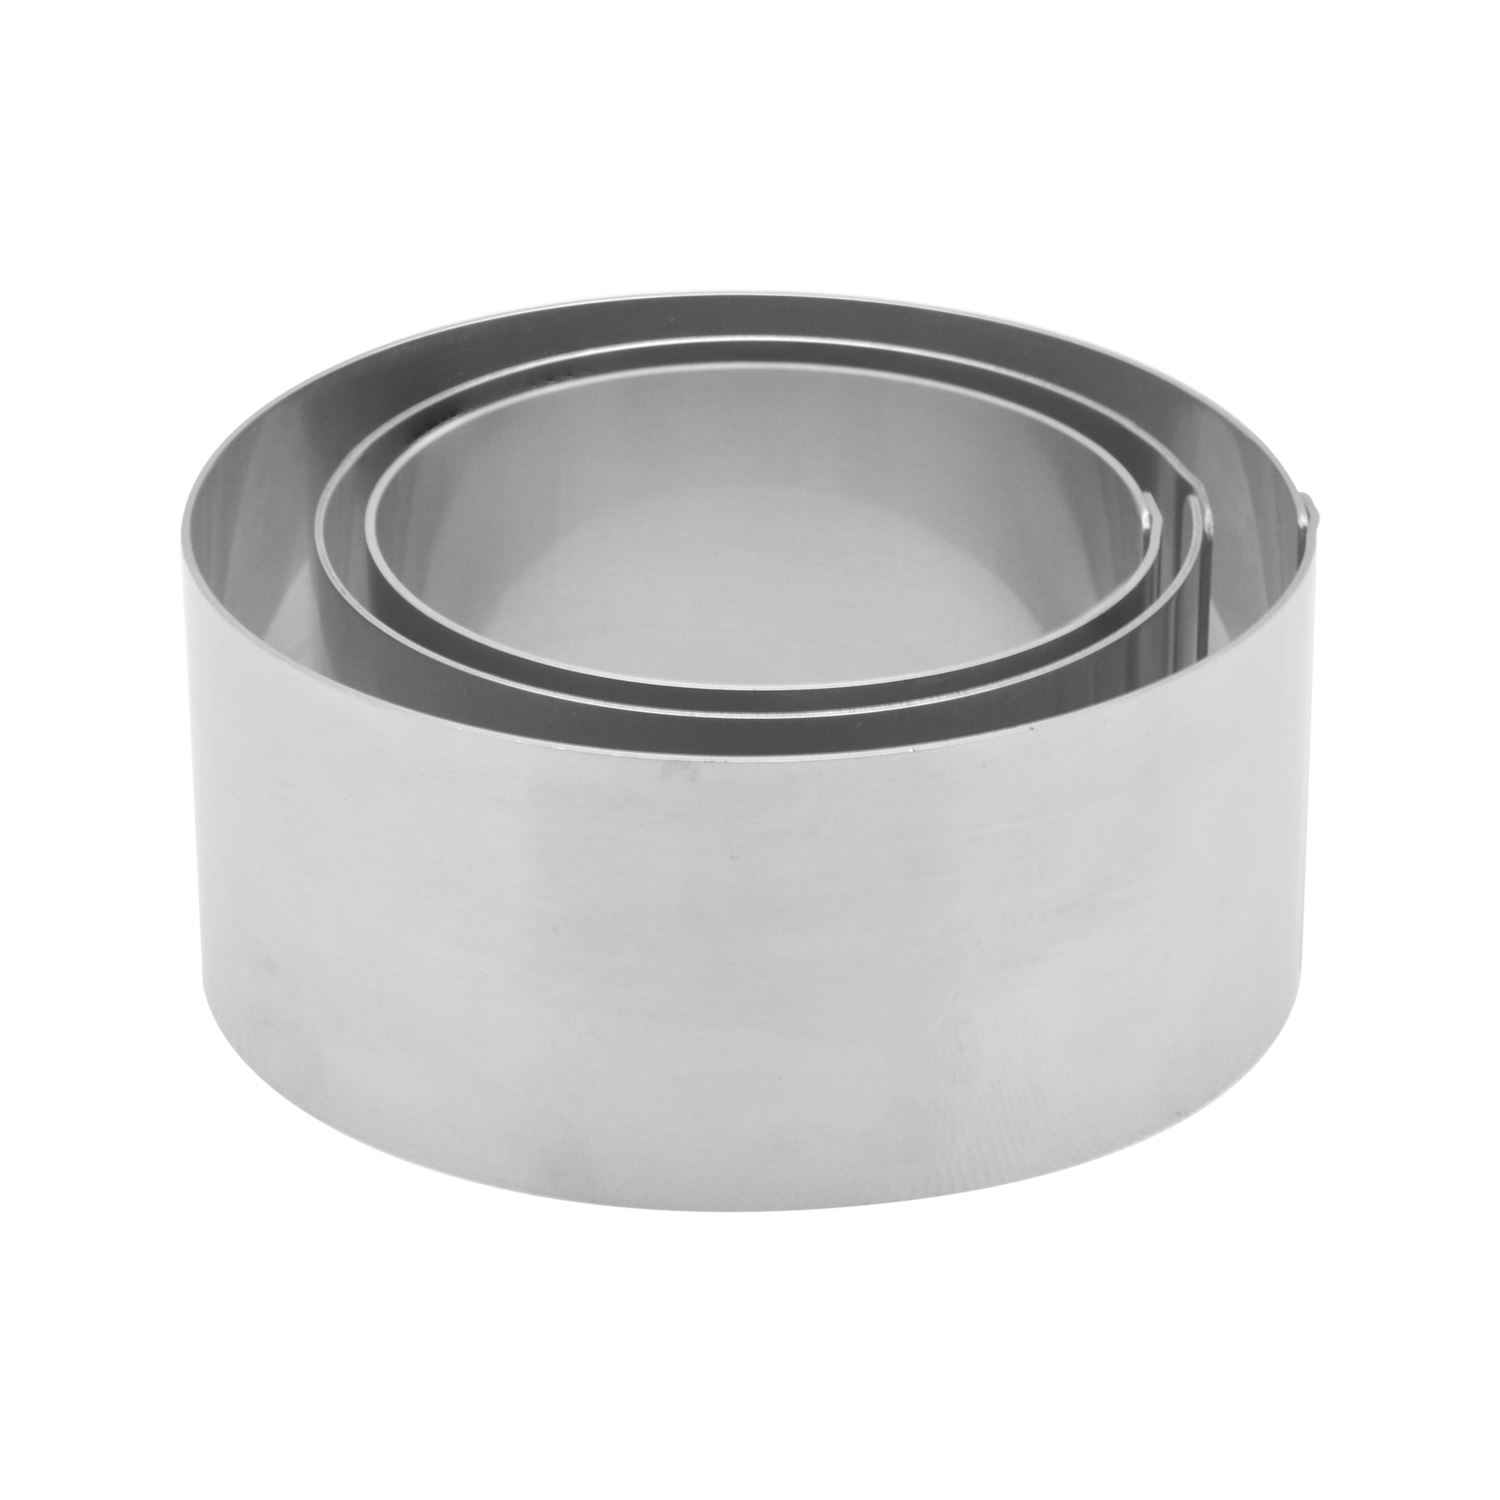 Raj Steel Ring Cutter Set Of 3